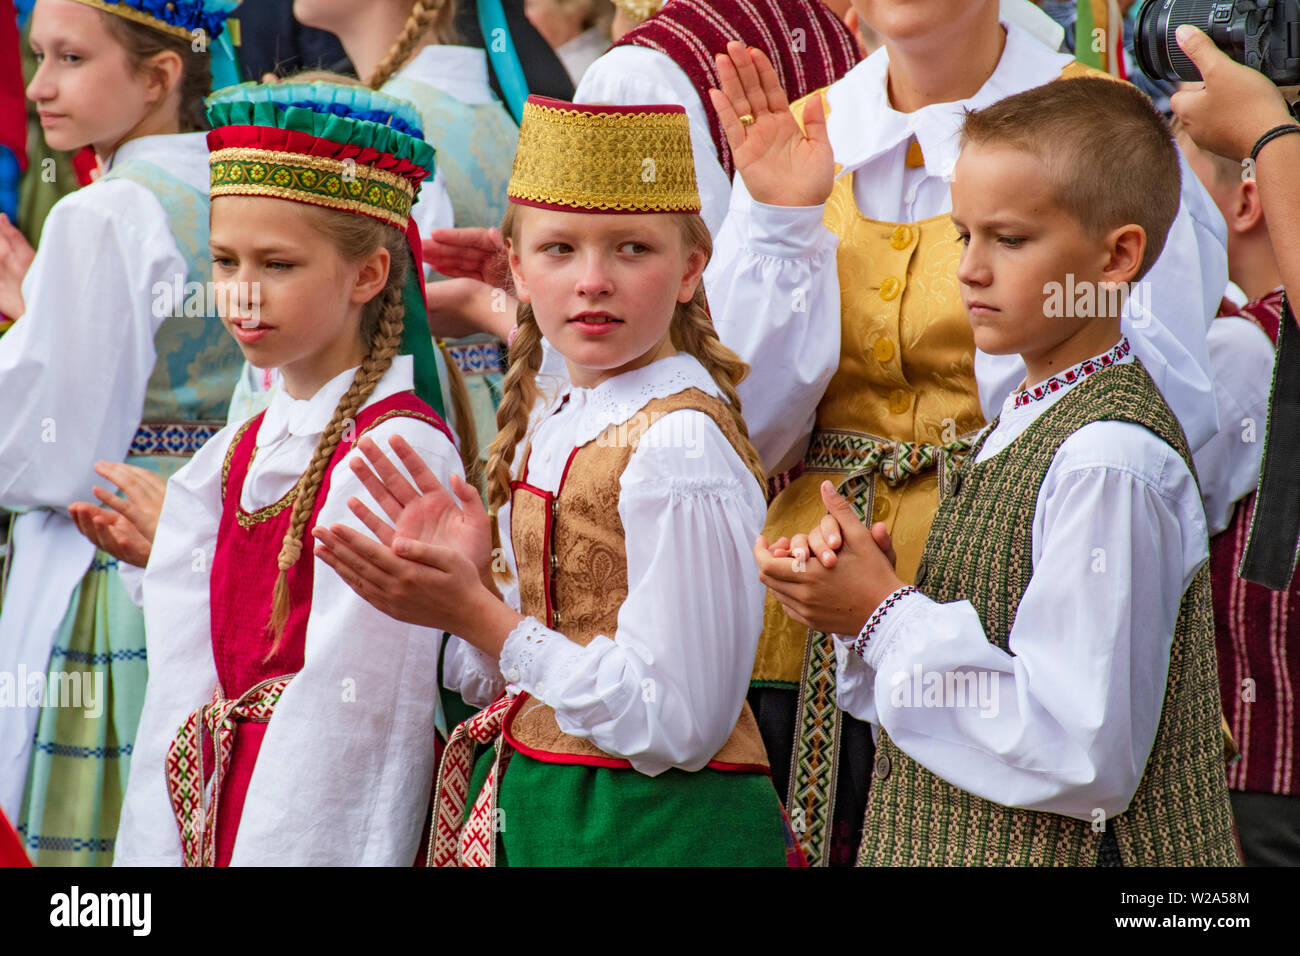 Lithuanian folk costumes